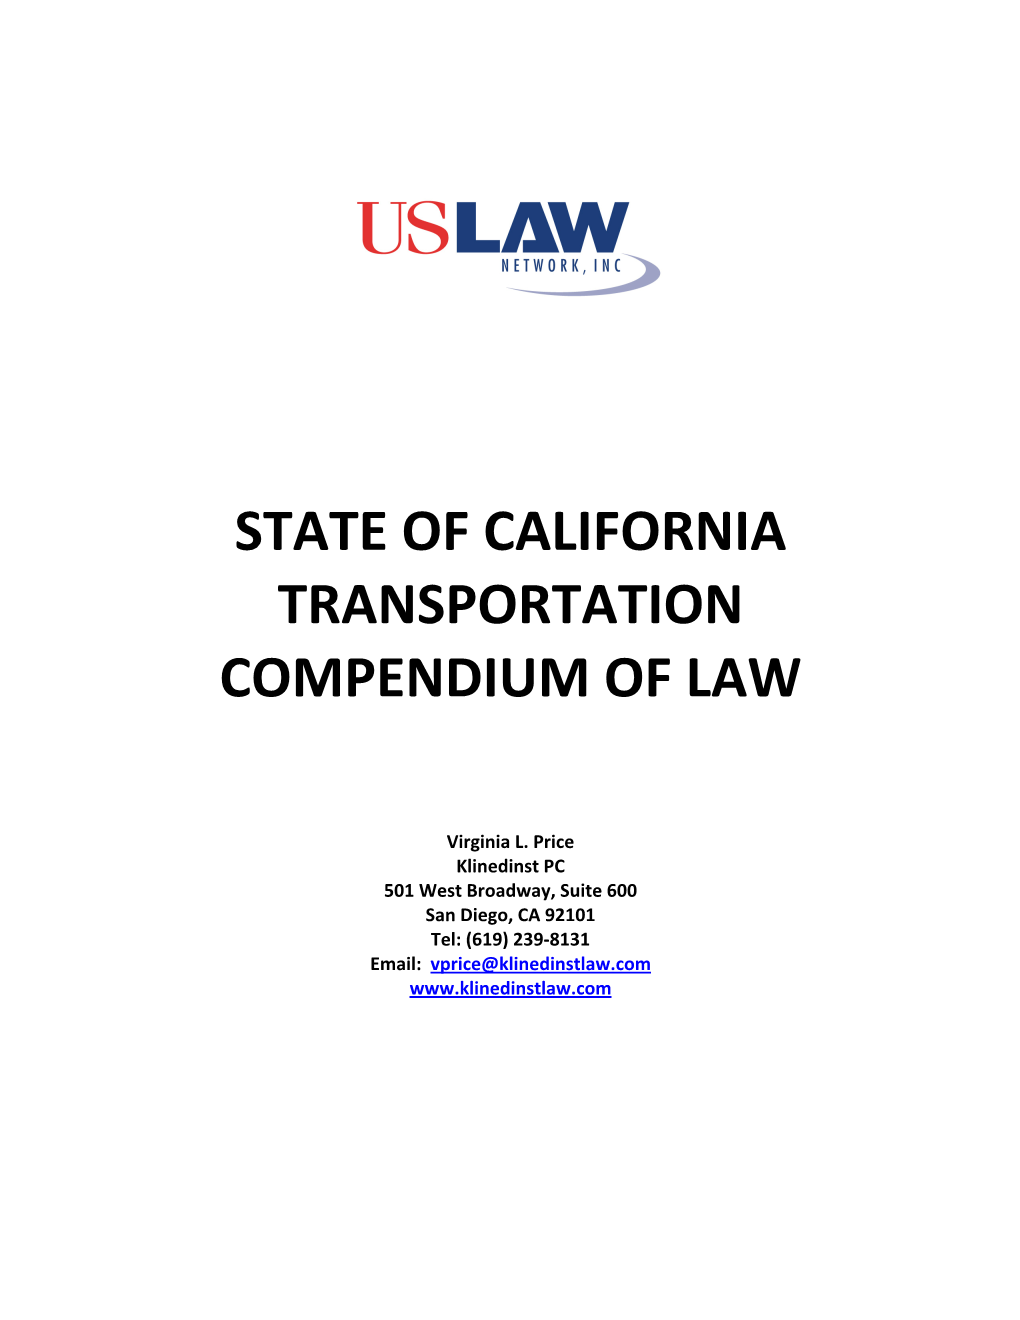 State of California Transportation Compendium of Law